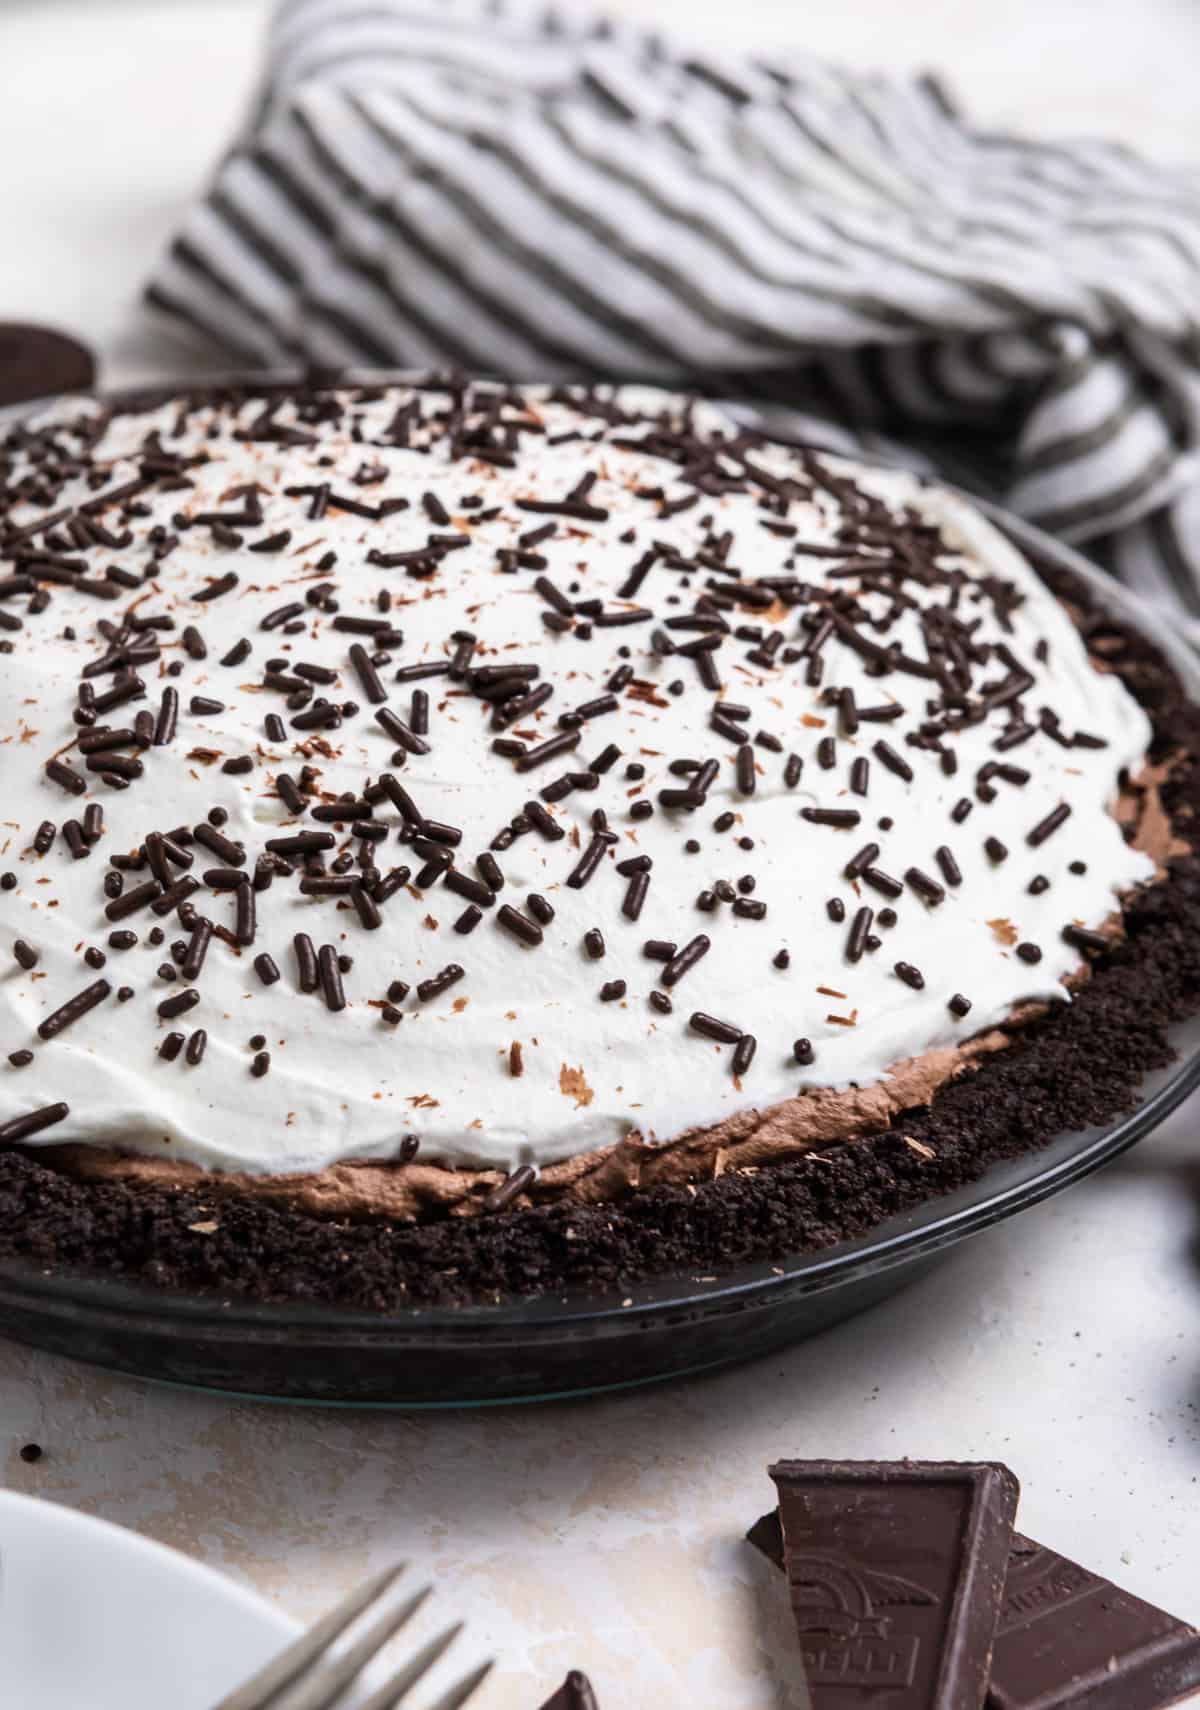 No bake chocolate pie with chocolate sprinkles on top.